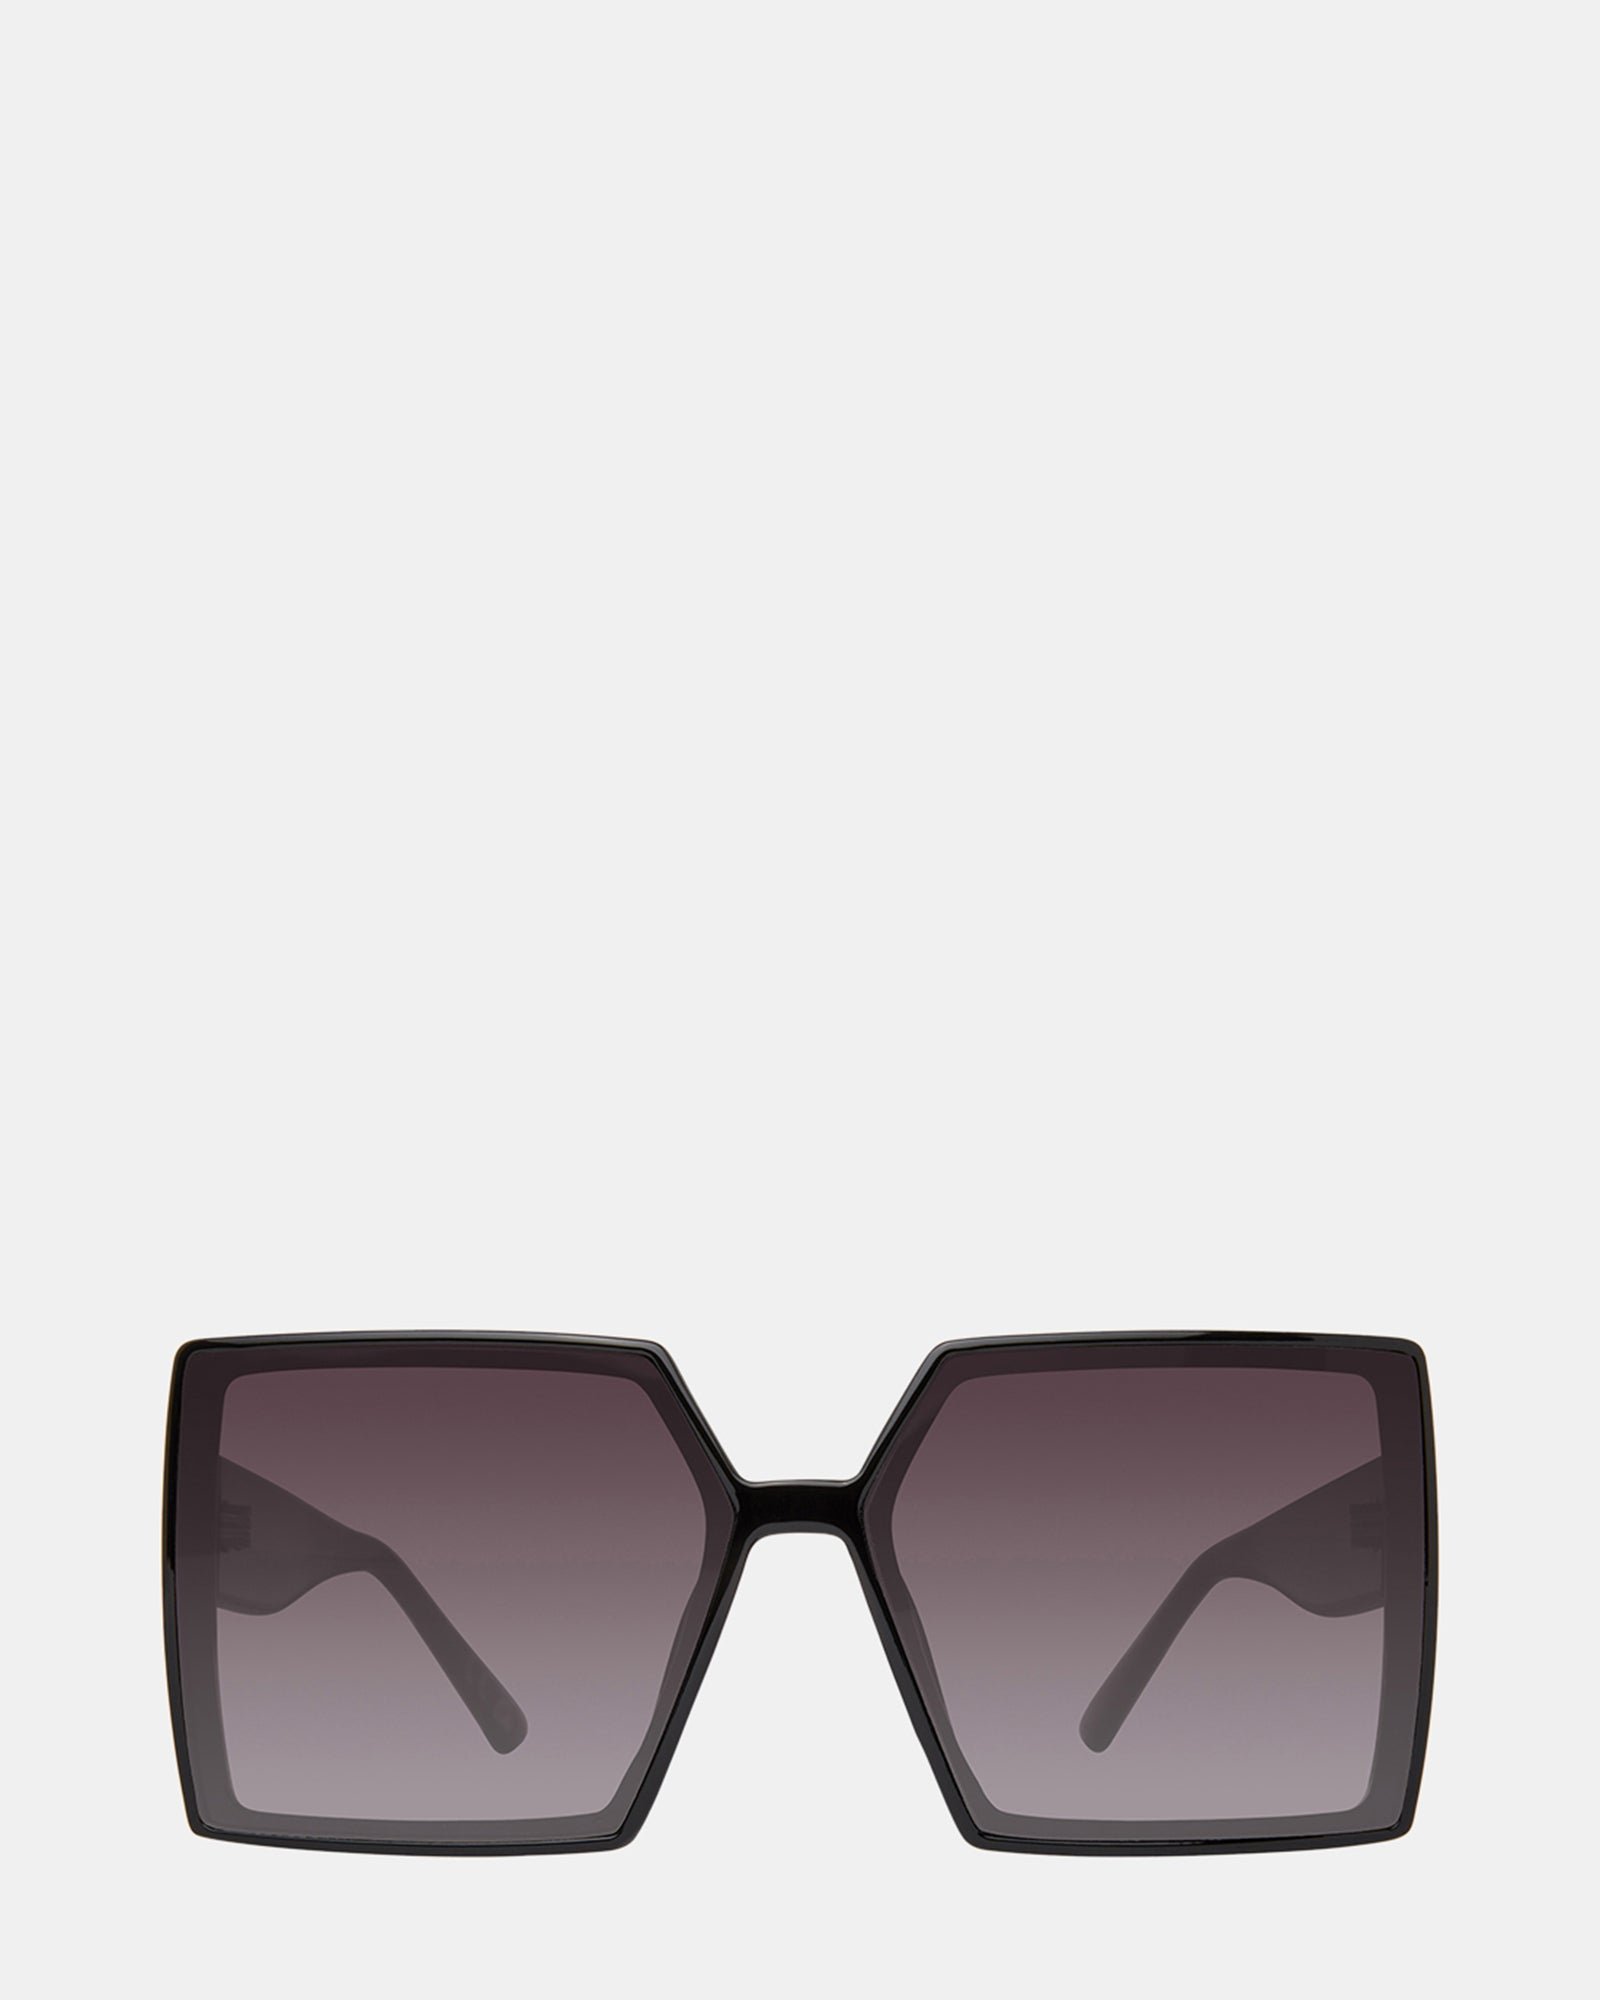 Used Designer Sunglasses  Grey Metal Small Sunglasses